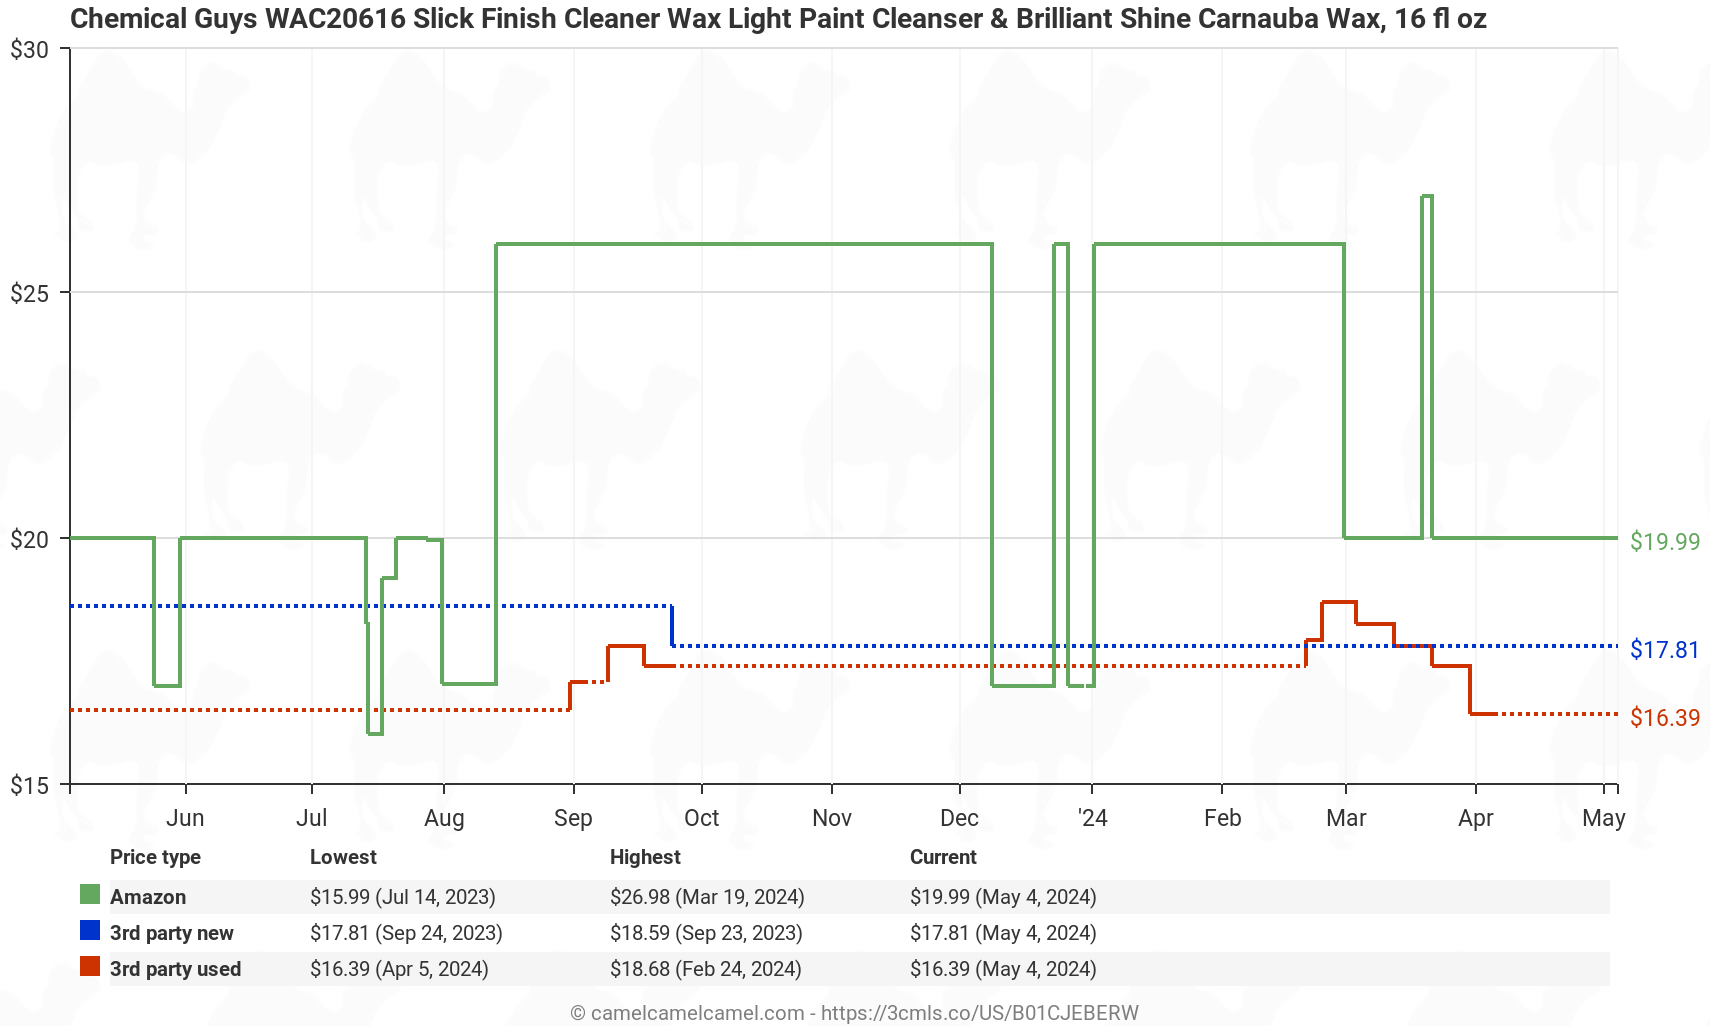 Chemical Guys WAC20616 Slick Finish Cleaner Wax (16 oz) - Price History: B01CJEBERW